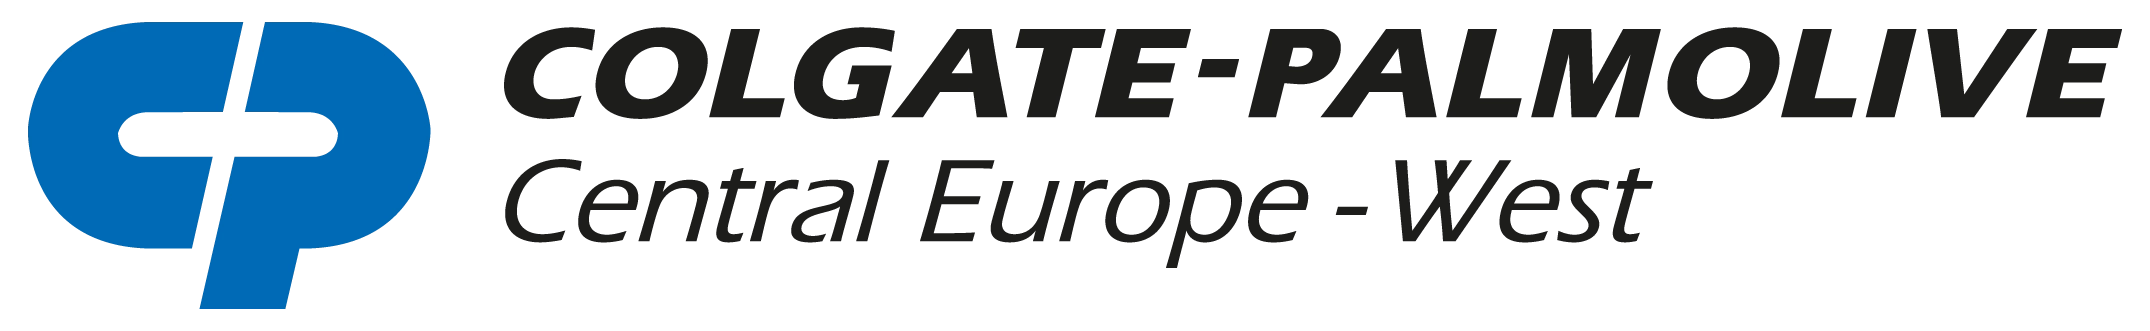 Logo_CP_Colgate-Palmolive_Central_Europe-West